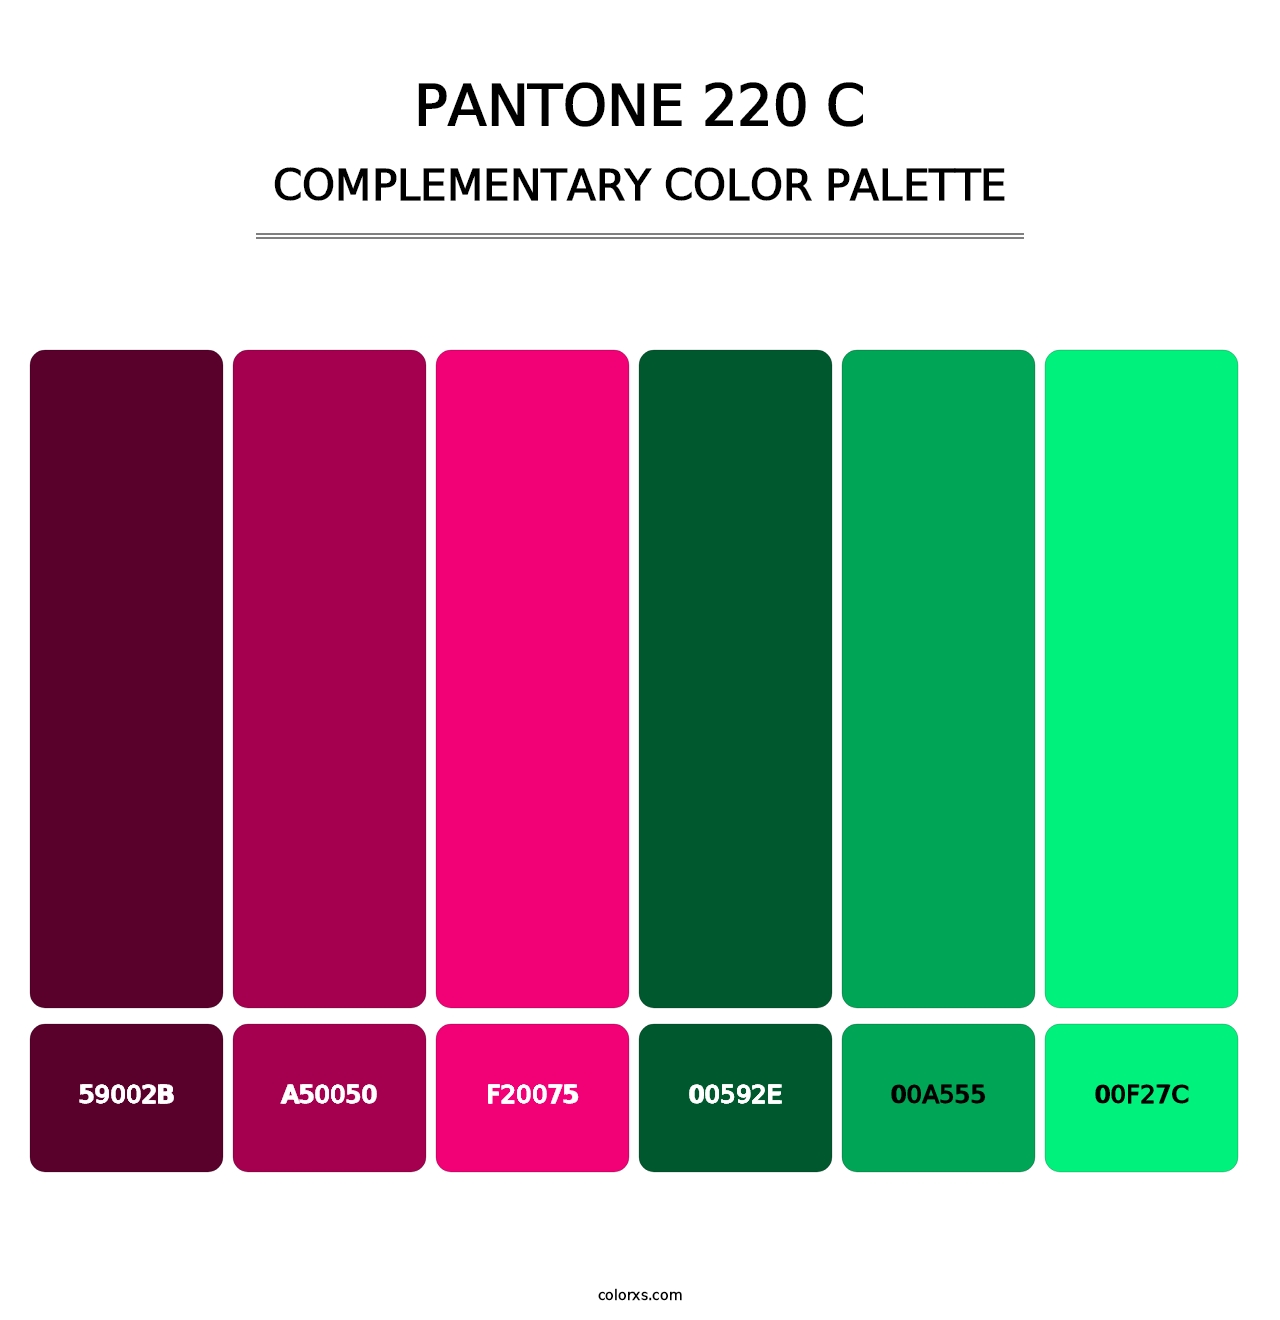 PANTONE 220 C - Complementary Color Palette